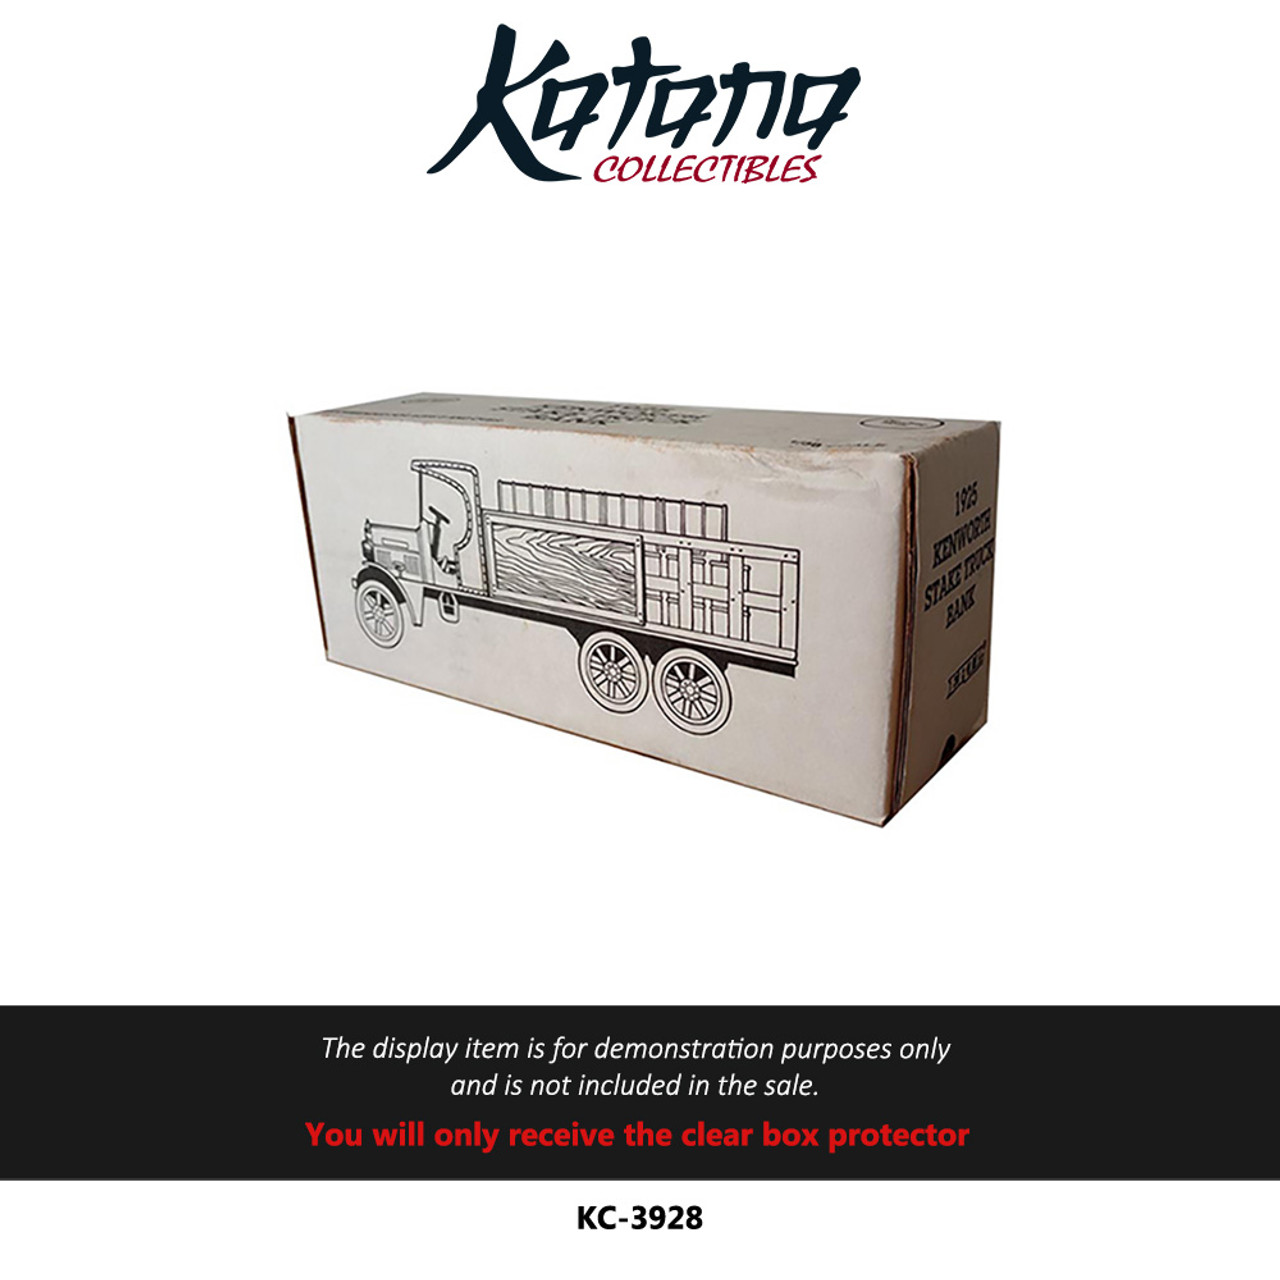 Katana Collectibles Protector For ERTL 1925 Kenworth Stake Truck Bank